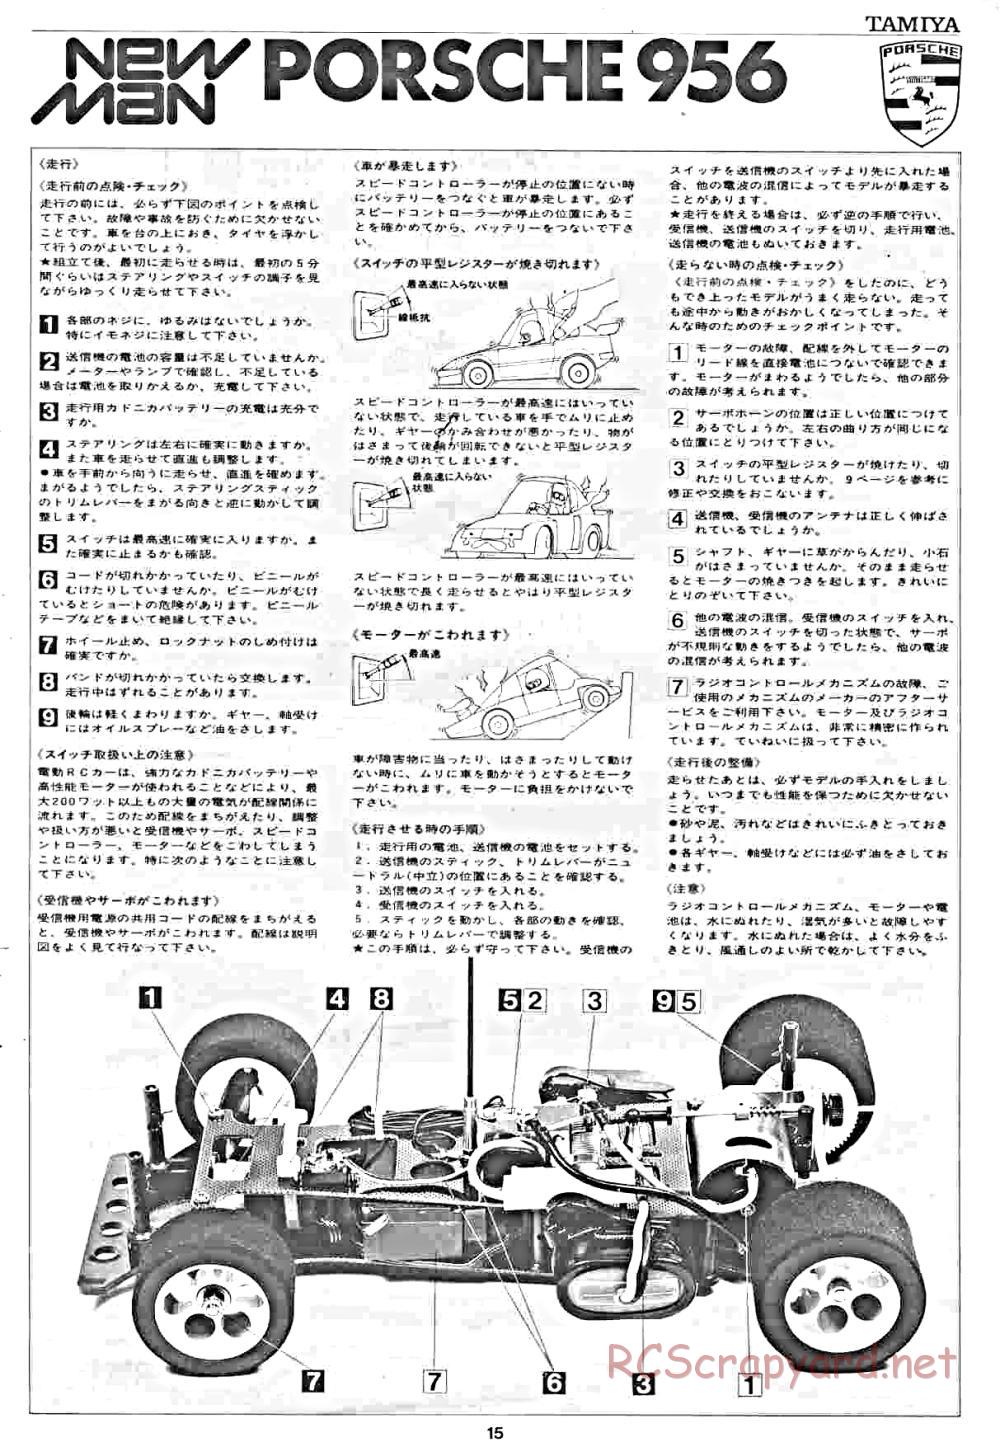 Tamiya - Newman Prsch 956 - RM MK.7 - 58052 - Manual - Page 15